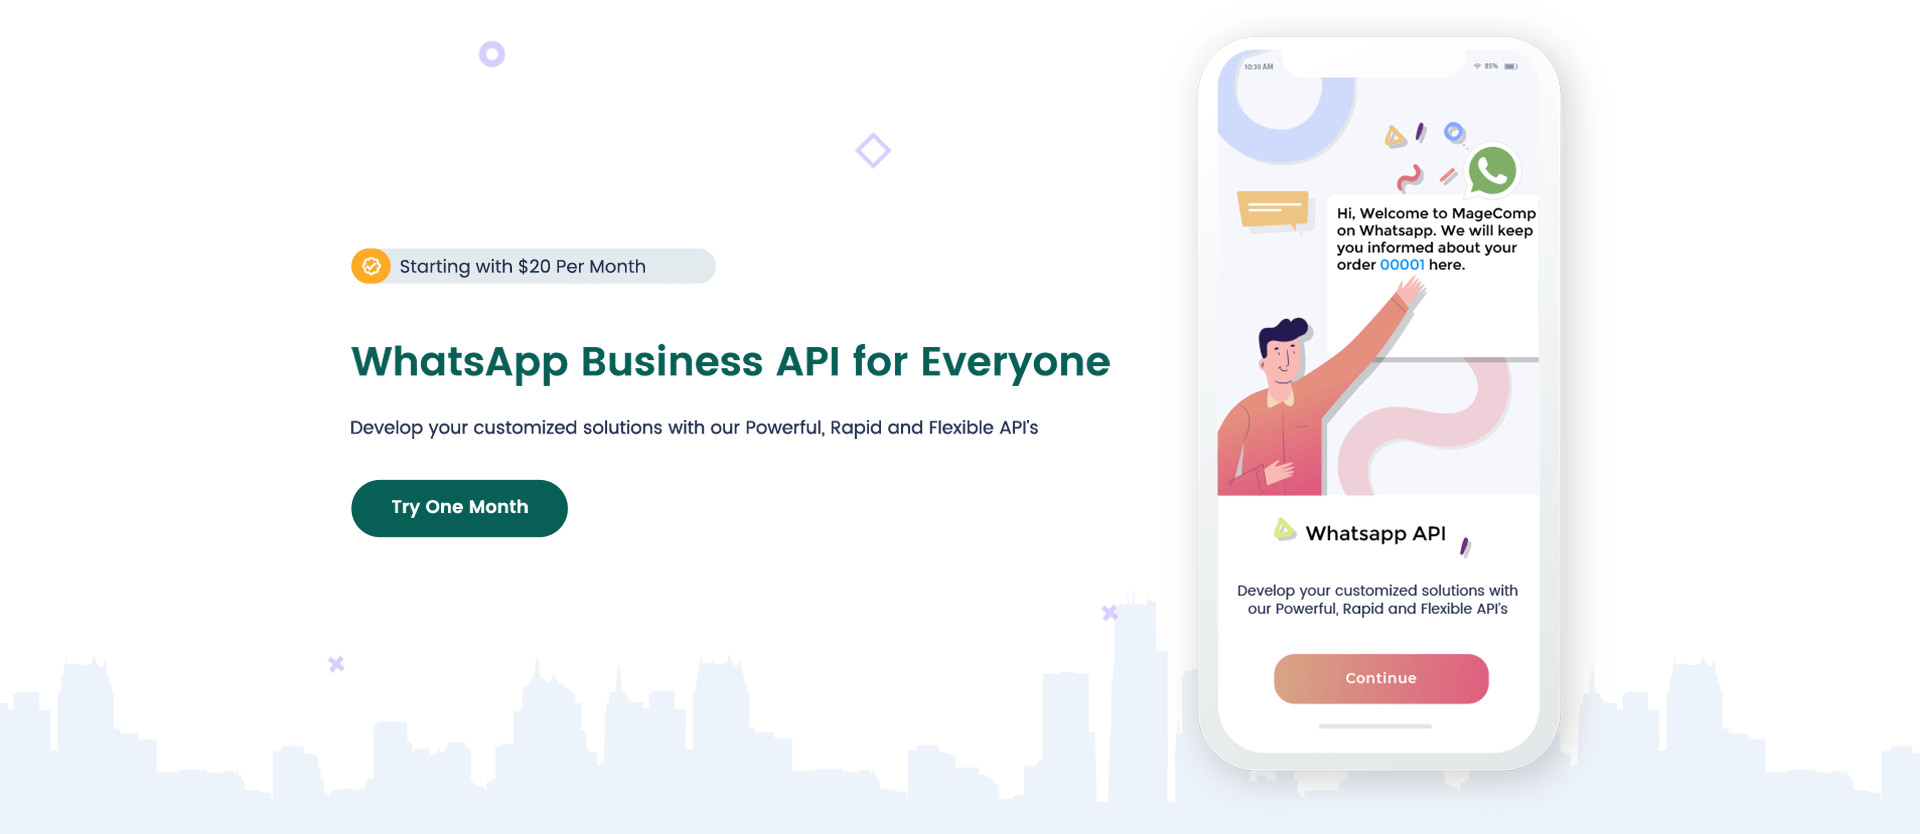 WhatsApp Business API service by MageComp